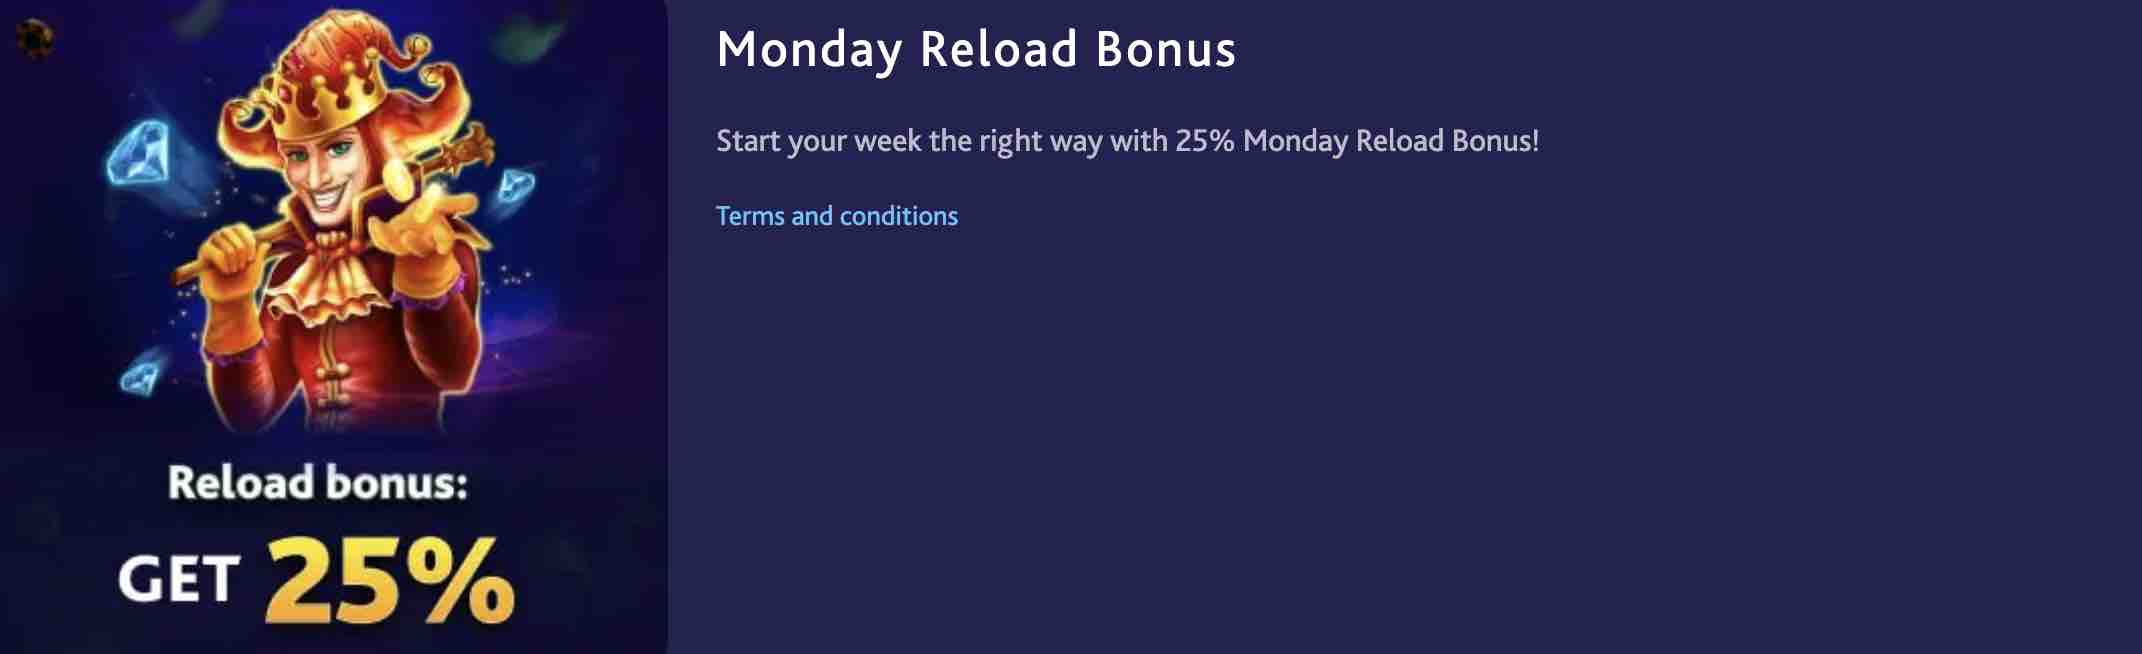 A screenshot of the Monday Reload Bonus at 7bit casino